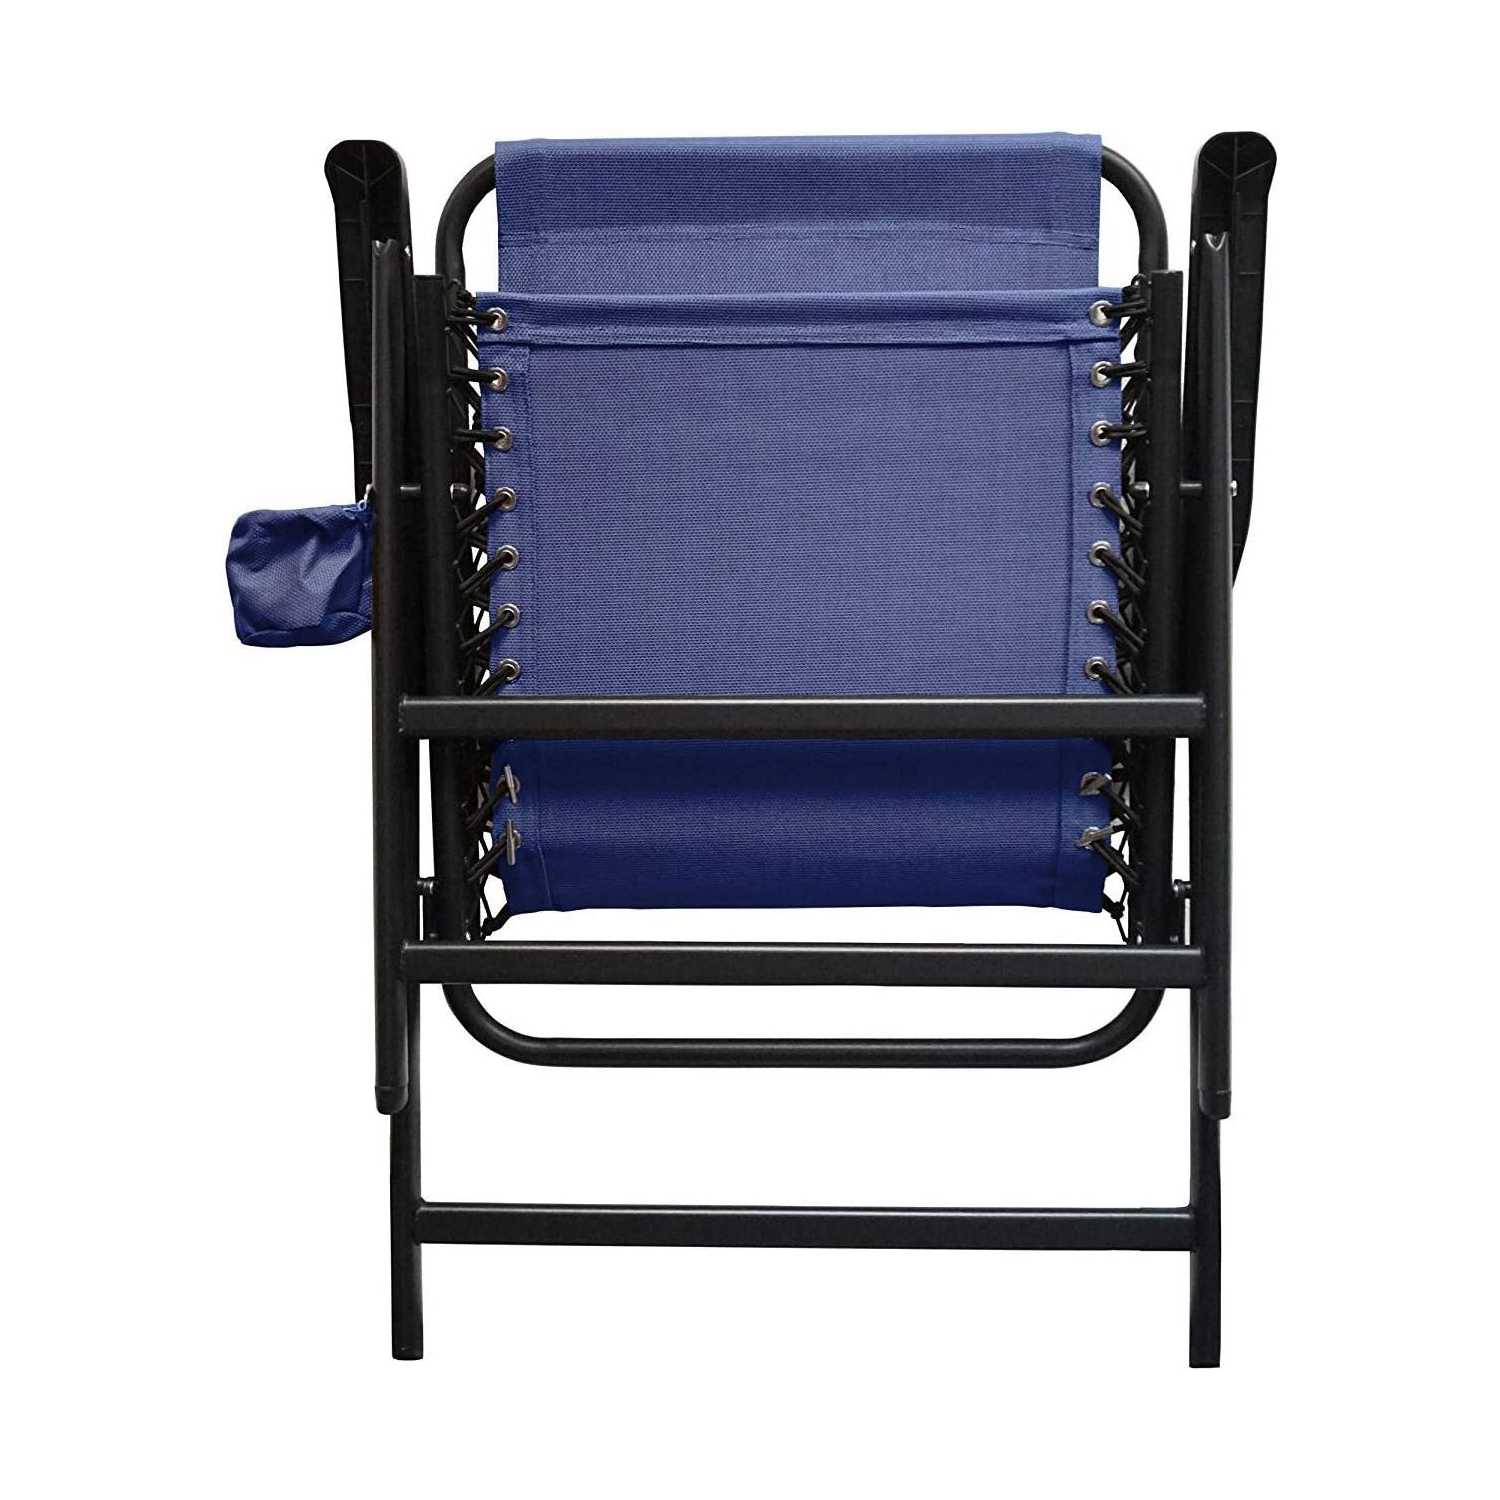 Caravan Sports XL Suspension Chair, Blue - image 3 of 5